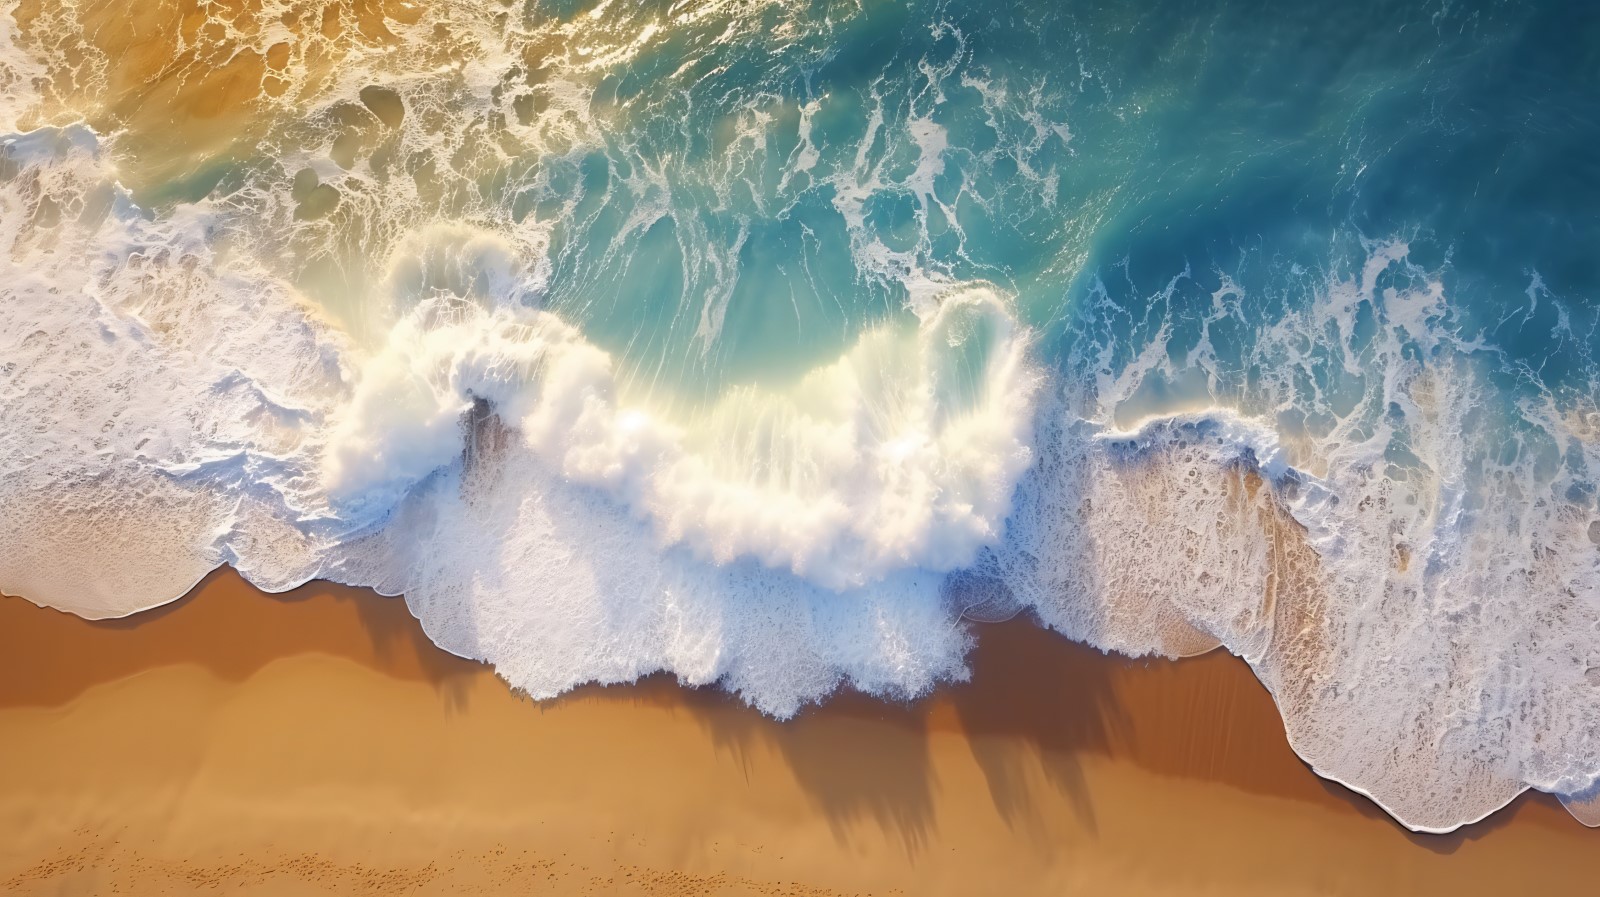 Beach scene waves surf with blue ocean sea island Aereal 018